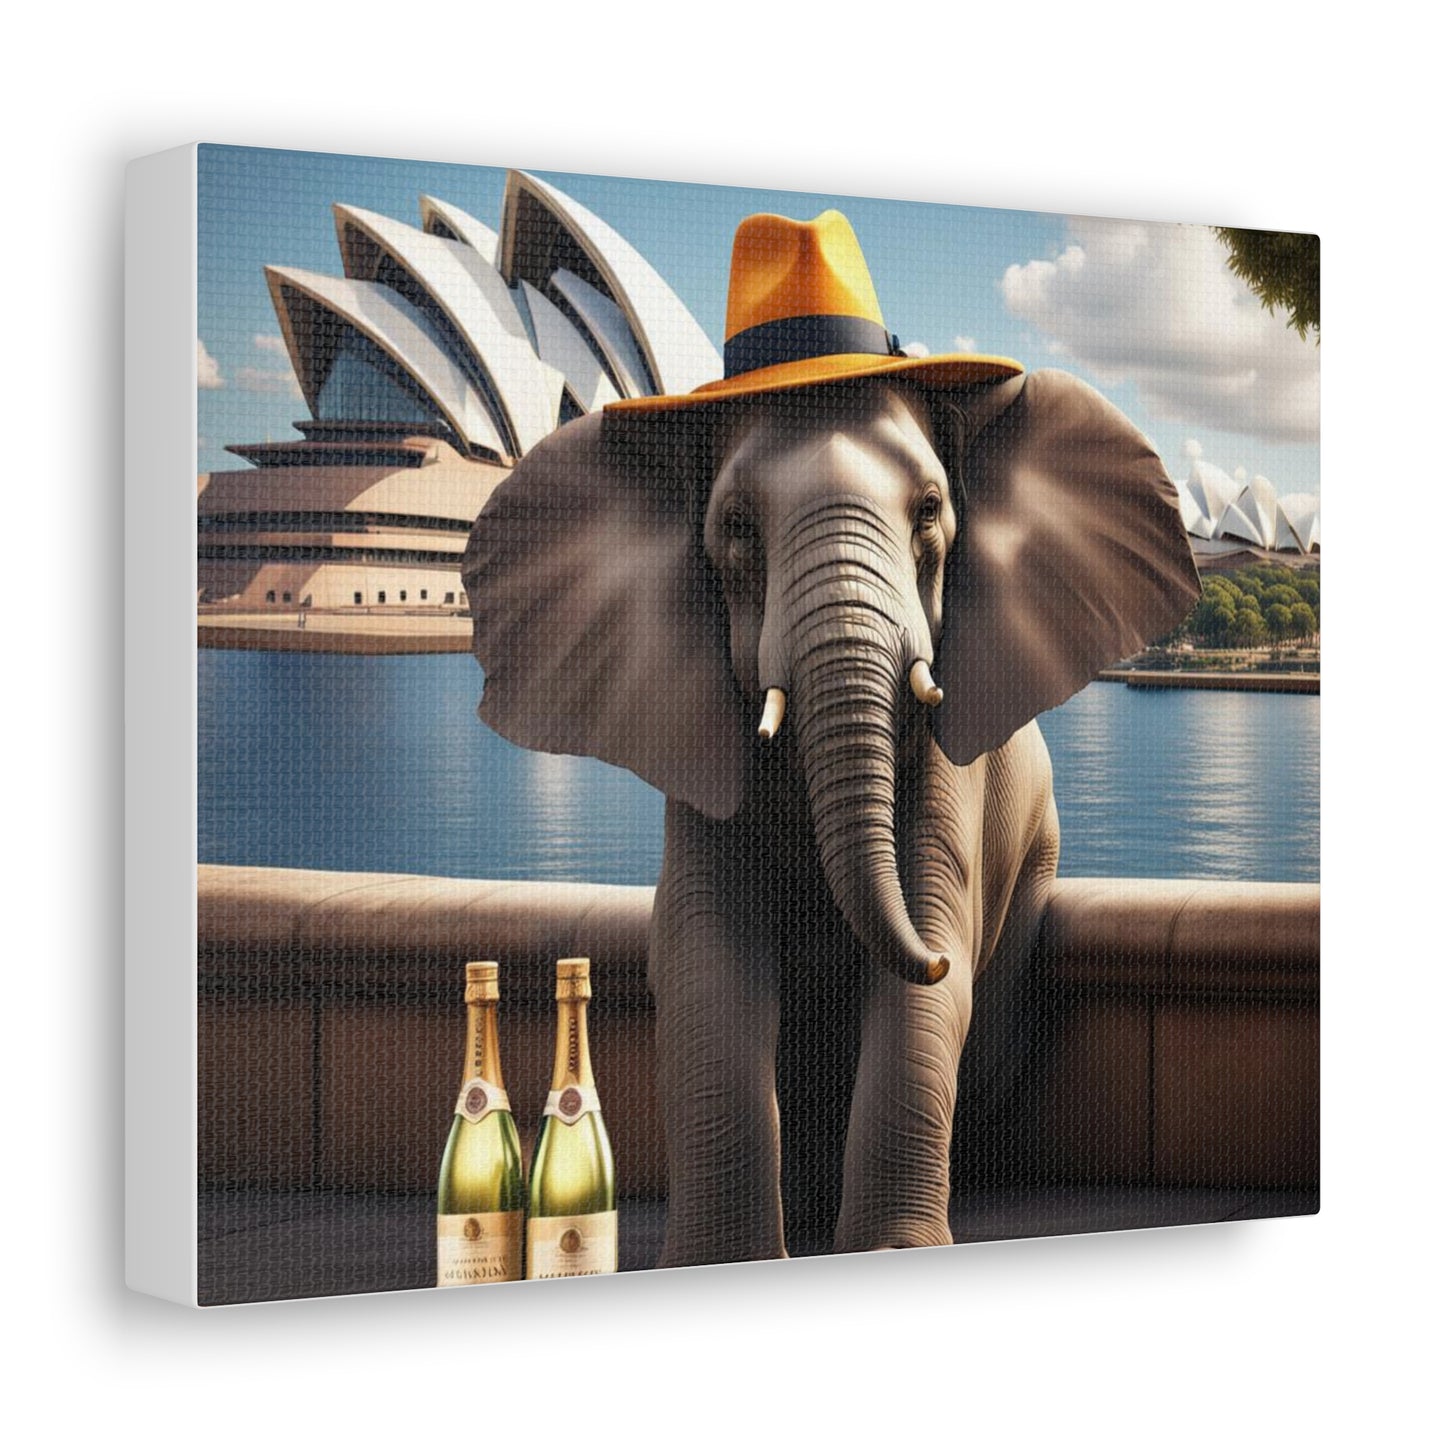 Havana Elephant in Sydney - Canvas Gallery Wrap